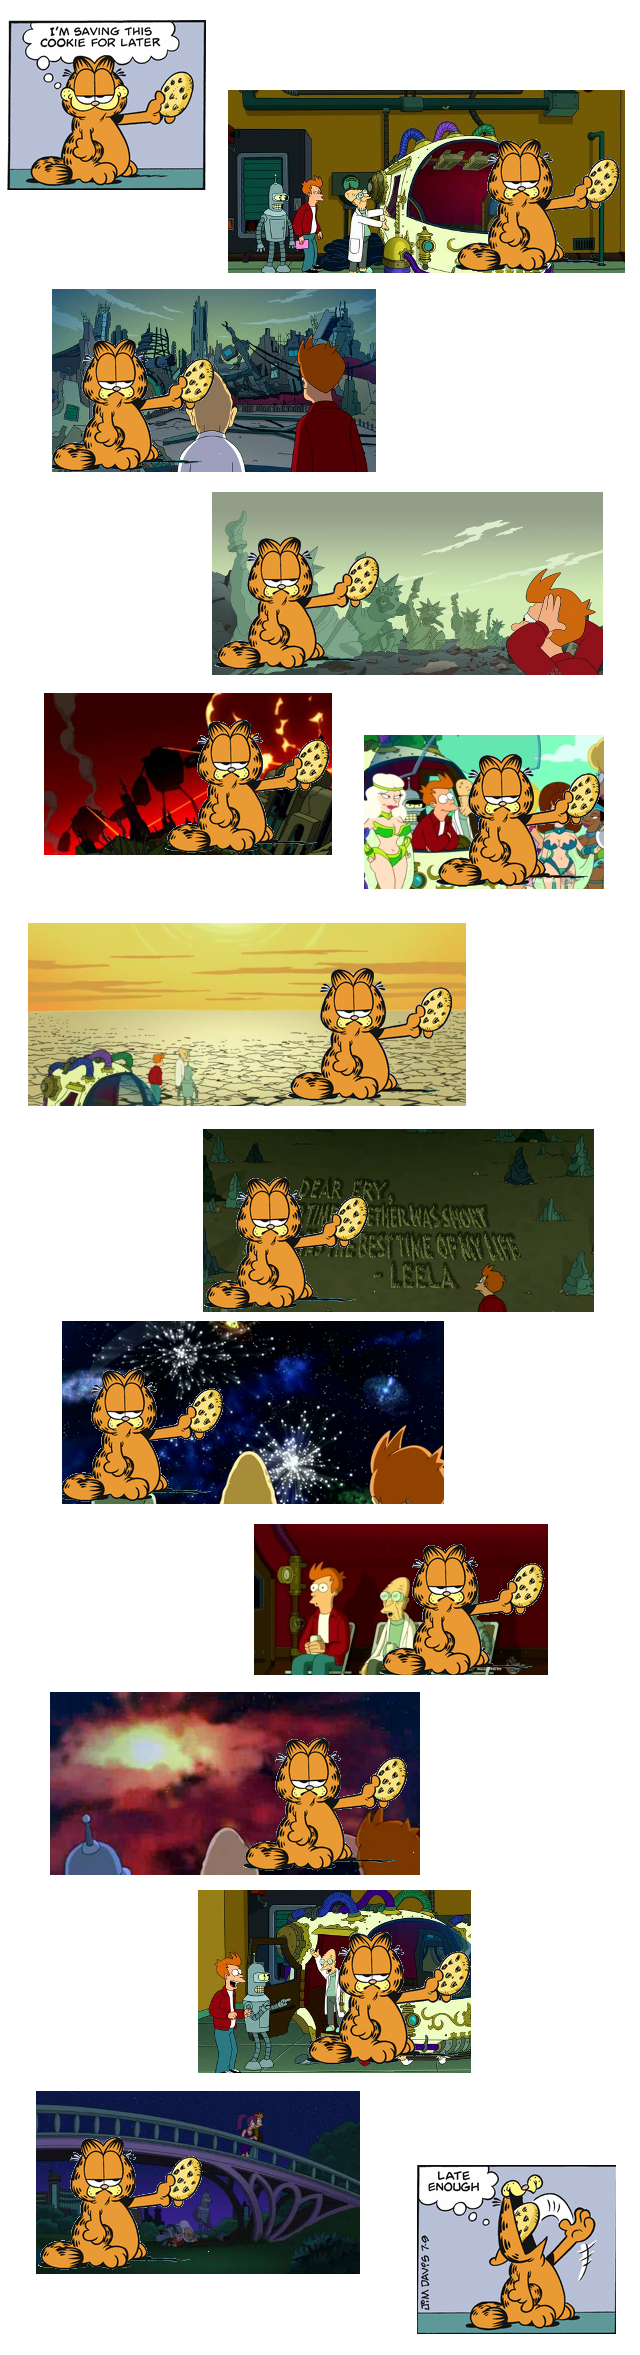 Garfield Plus Futurama